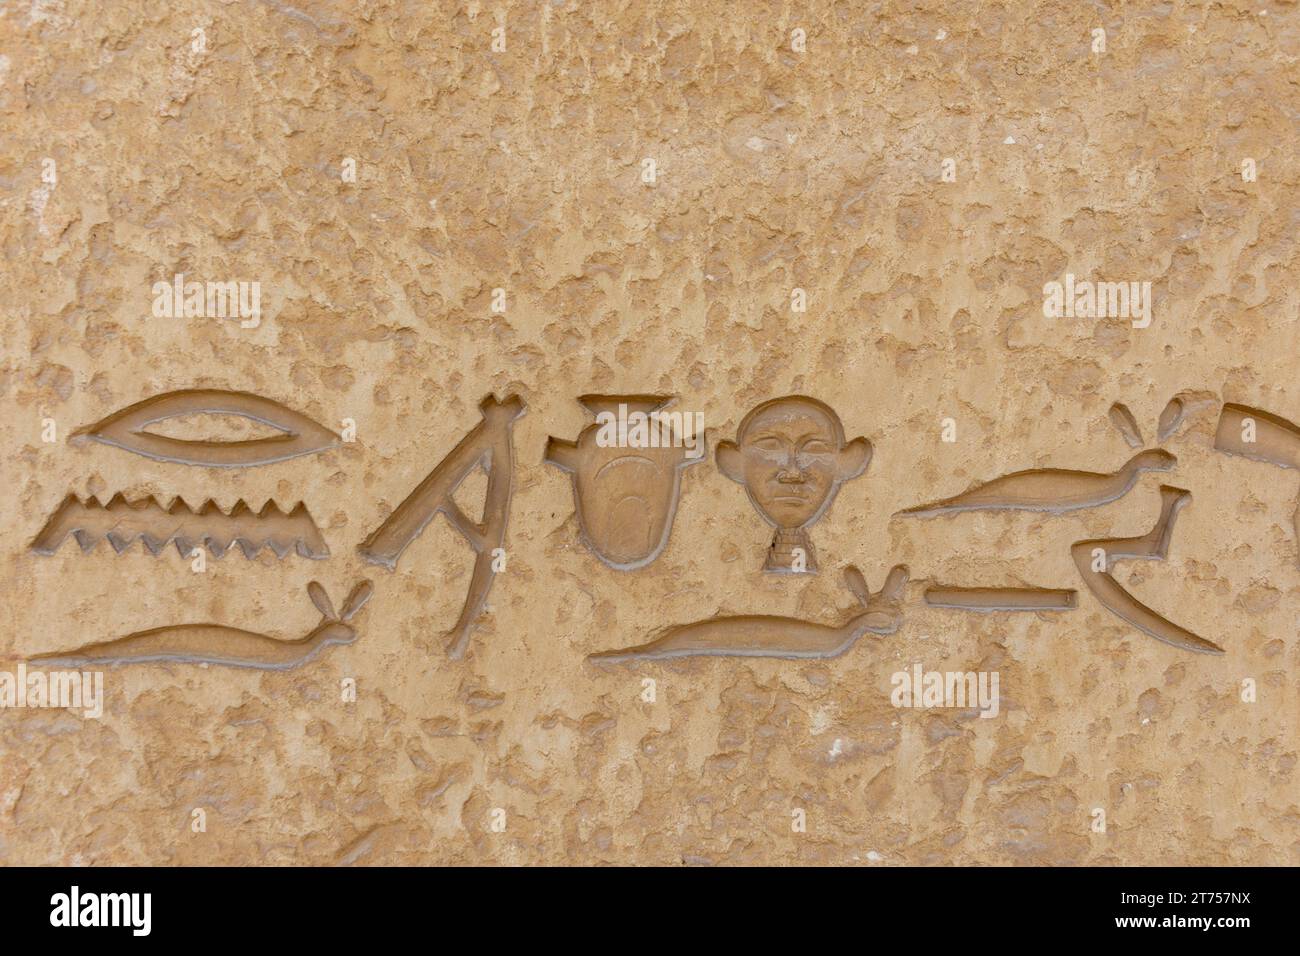 SAQQARA, EGYPT - MARCH 23, 2023:  Ancient Egyp hieroglyphic texts on walls  in the Saqqara necropolis, Egypt Stock Photo